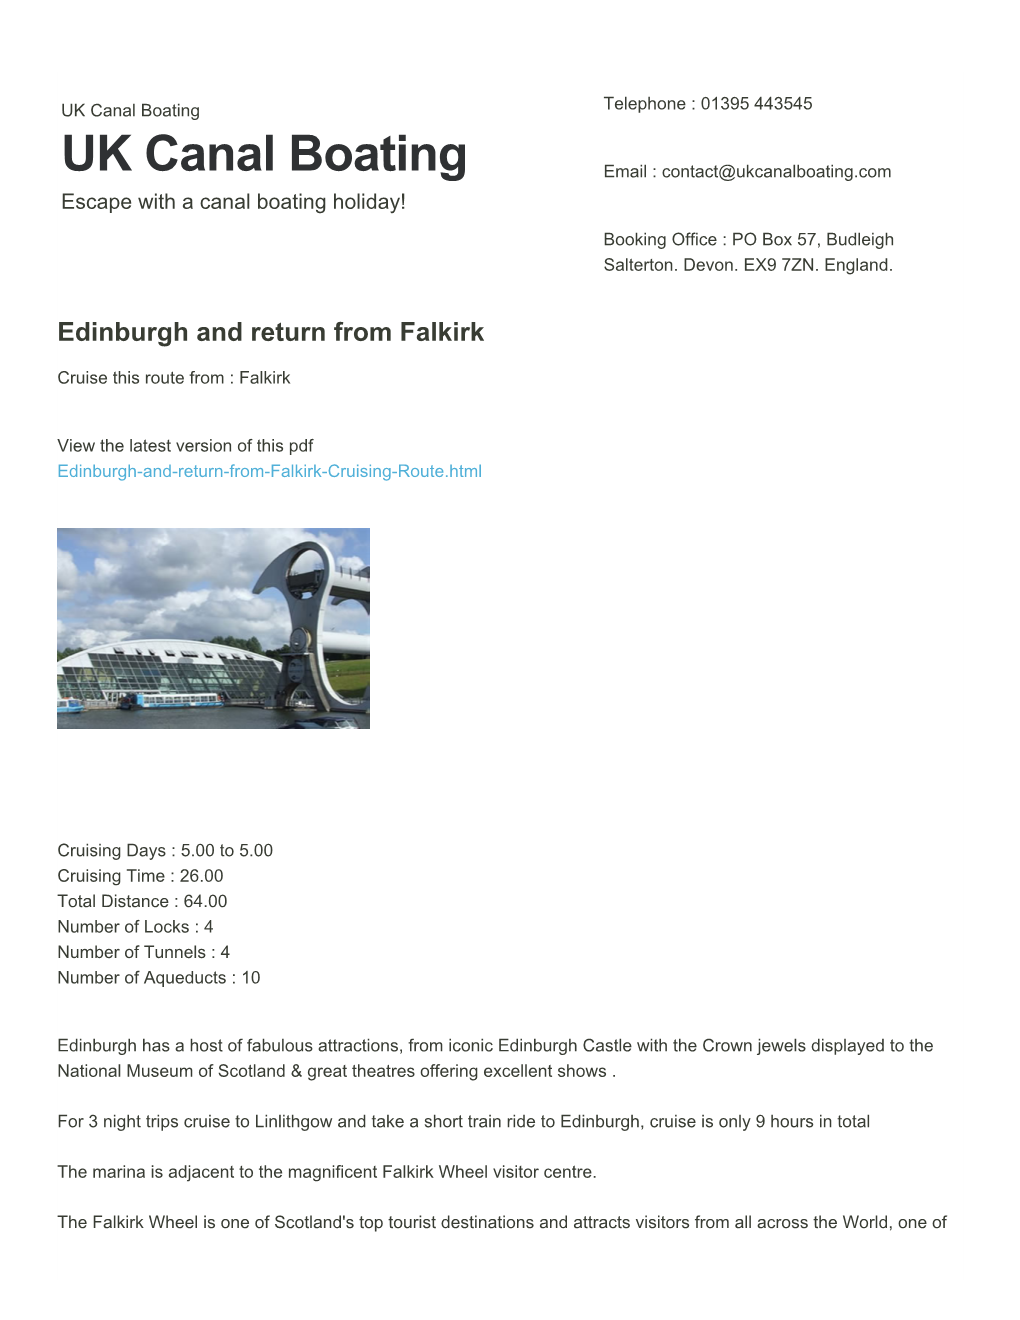 Edinburgh and Return from Falkirk | UK Canal Boating